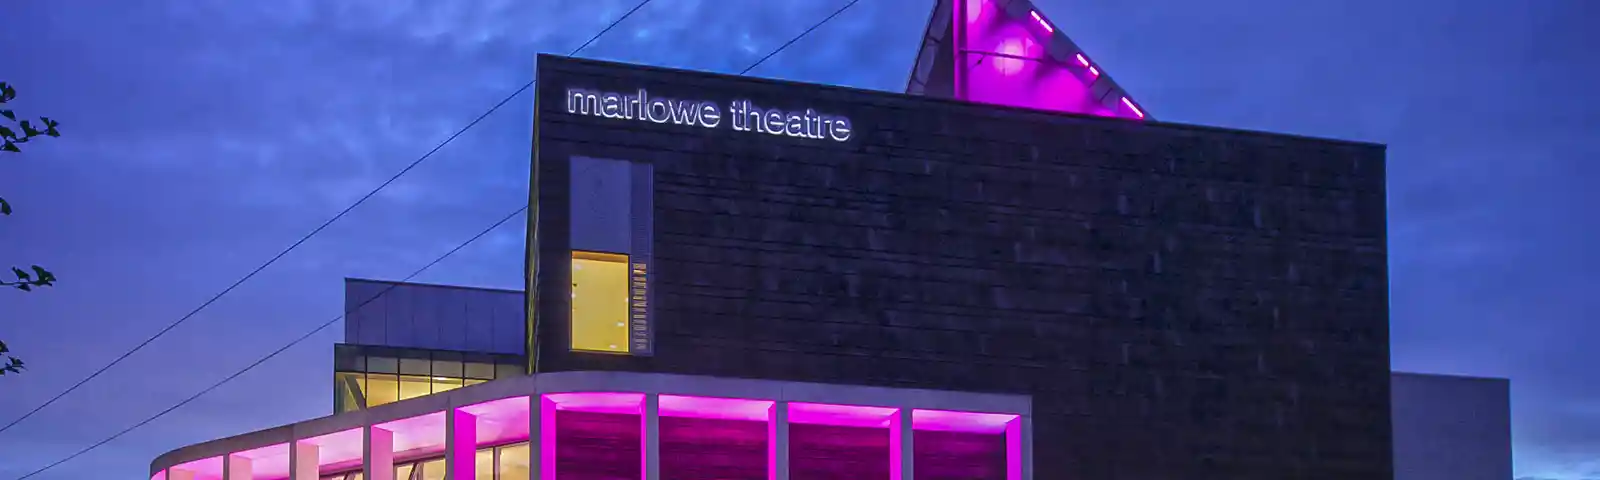 Marlowe Theatre Purple